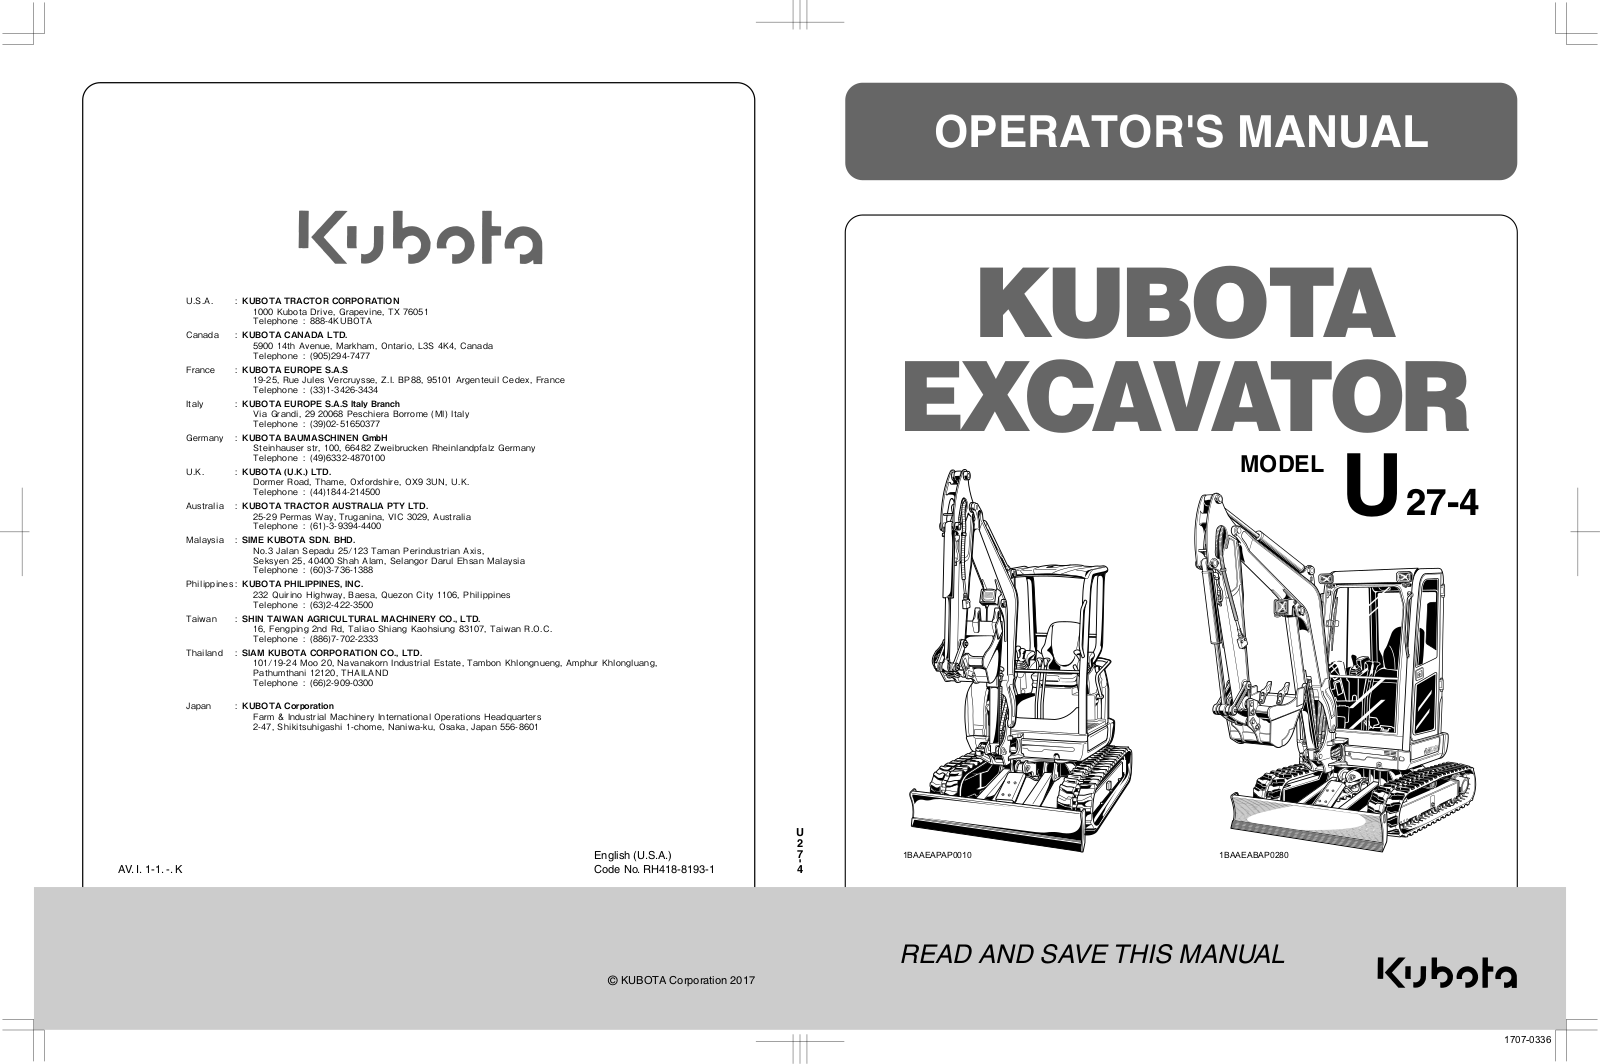 Kubota u27-4 Service Manual